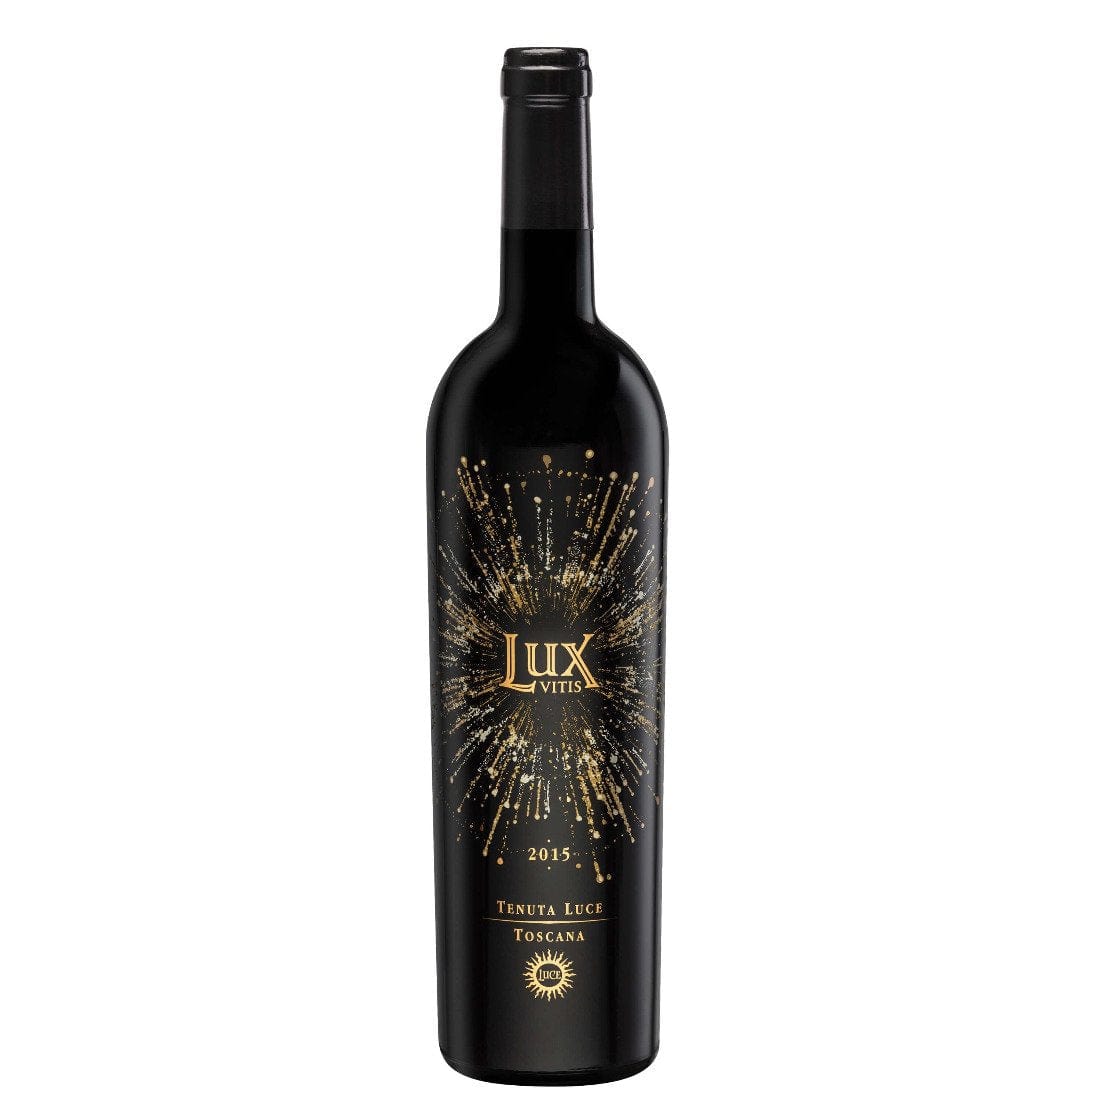 Lux Vitis 2018 Igt Toscana - Frescobaldi-Vinolog24.com